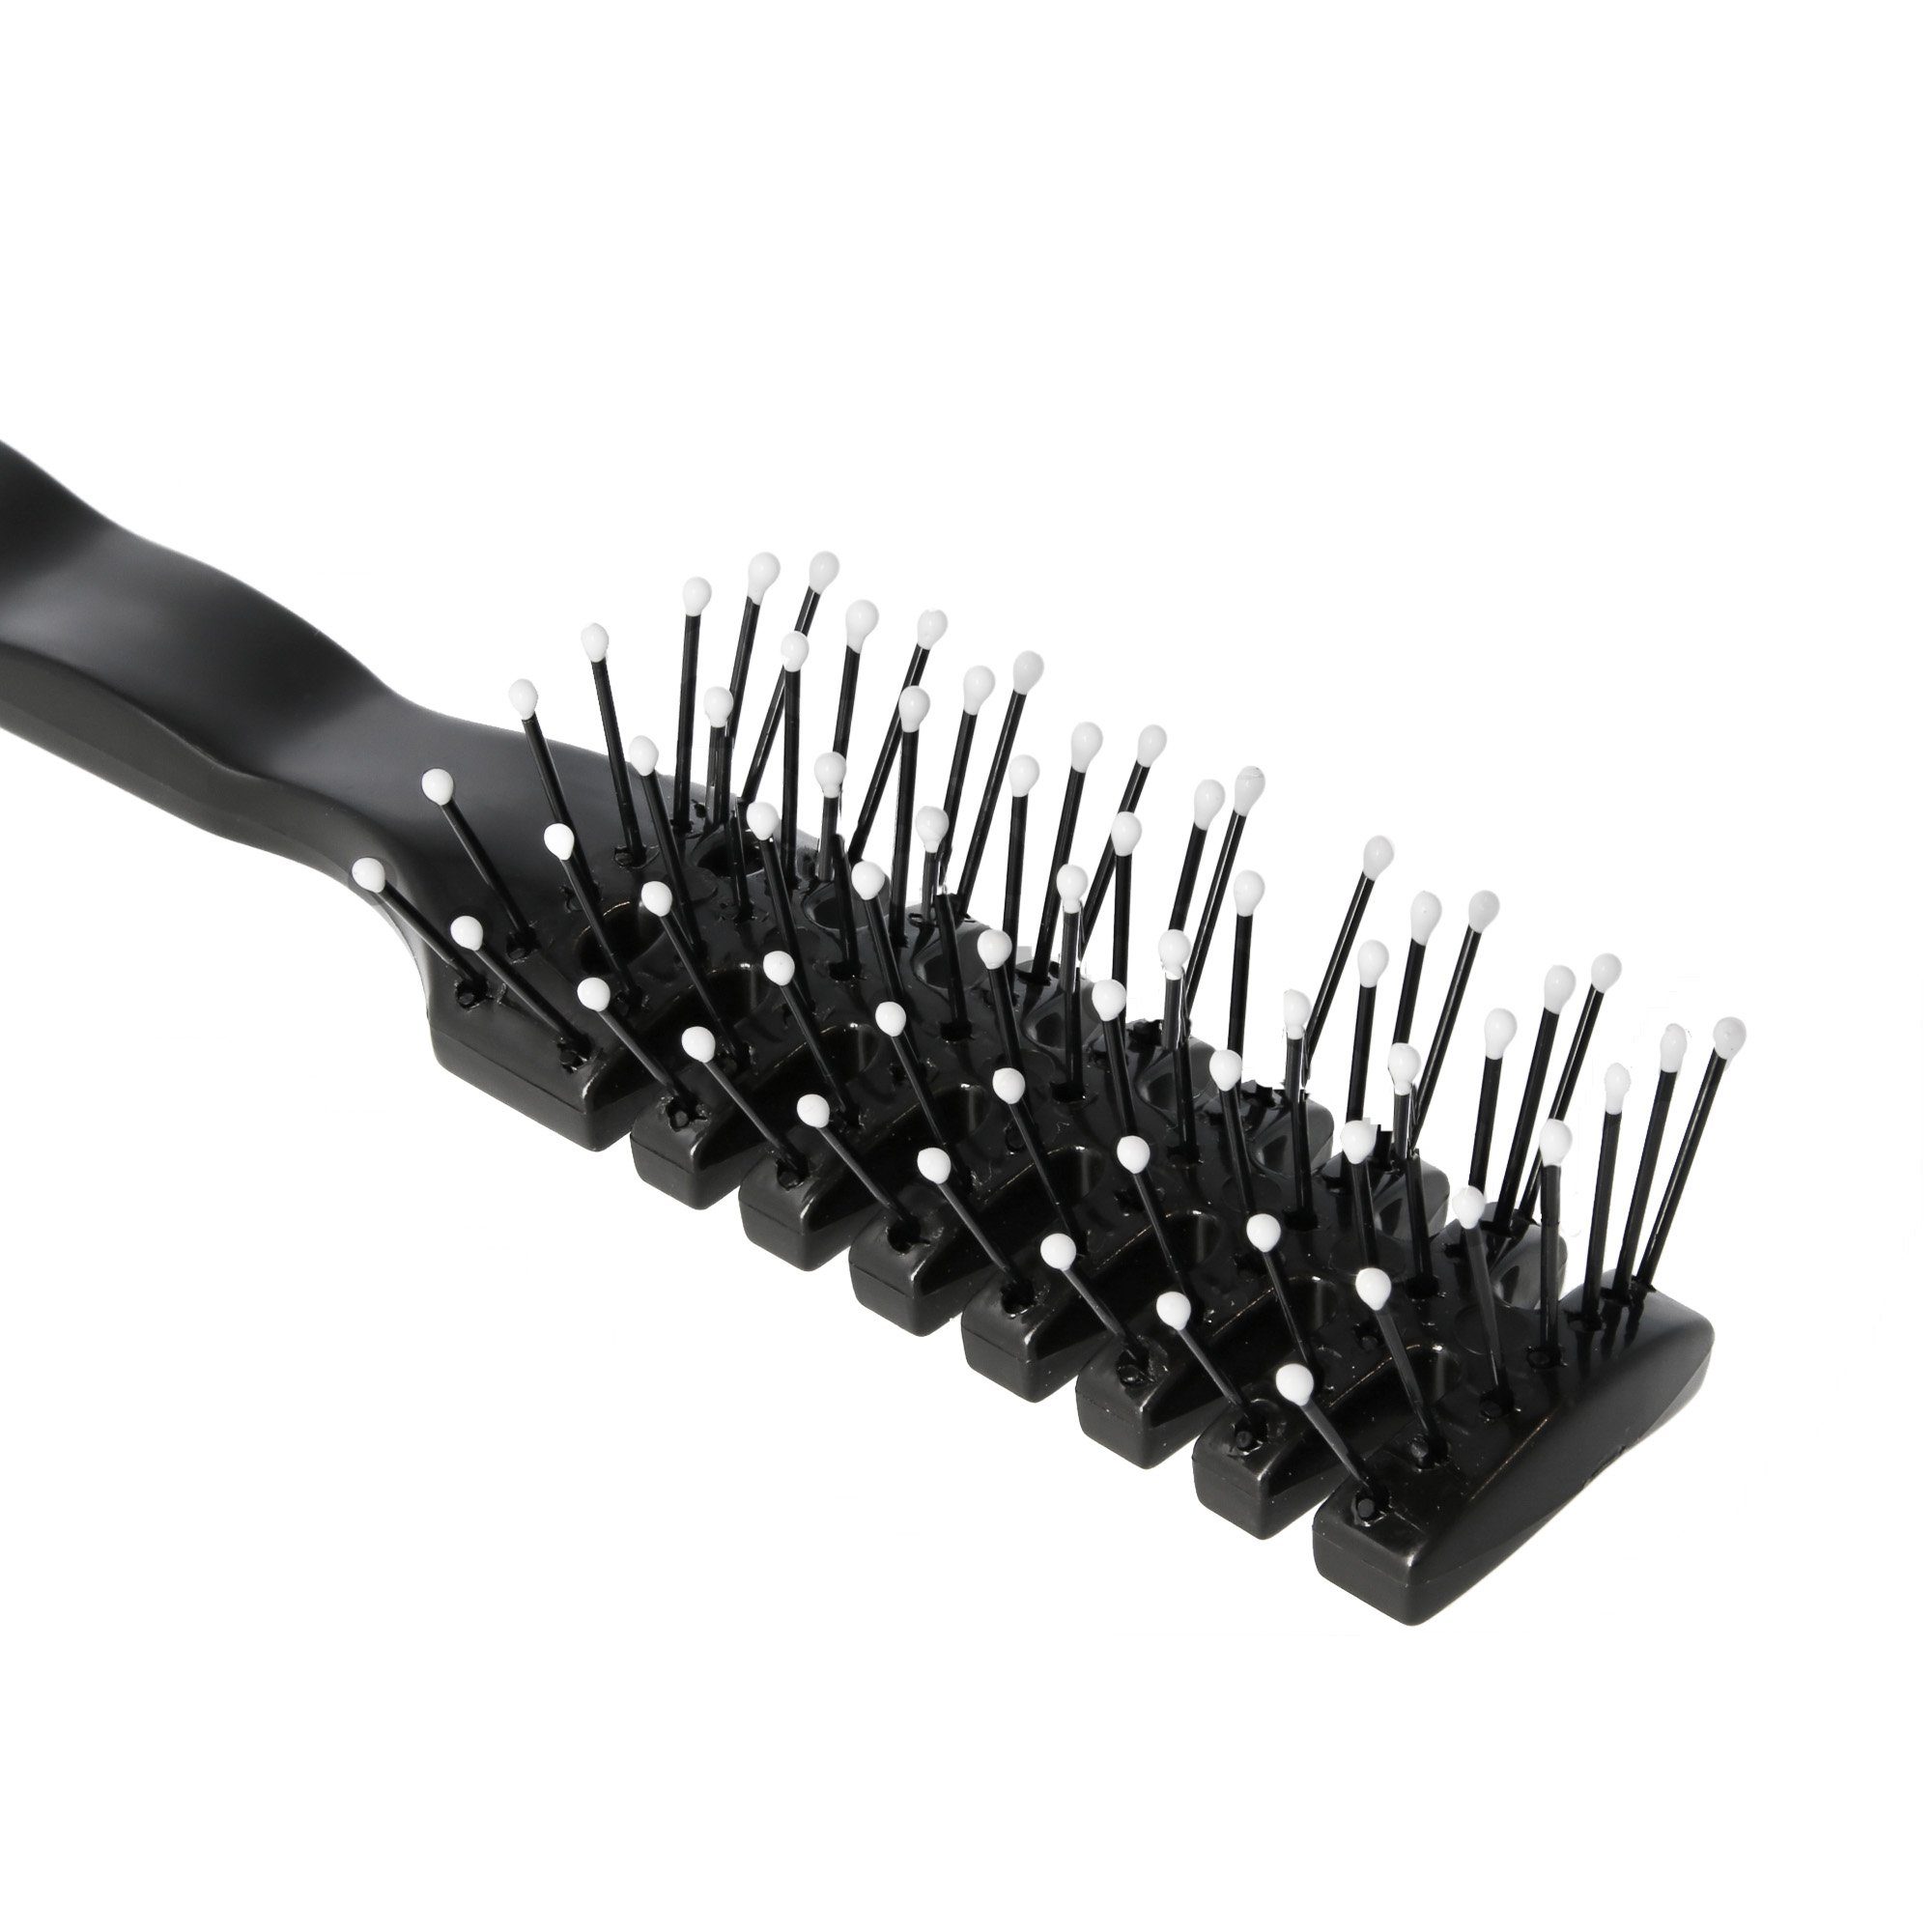 Luftschlitzbürste Beauty Föhnbürste Kunststoffpins mit Haarbürste PARSA